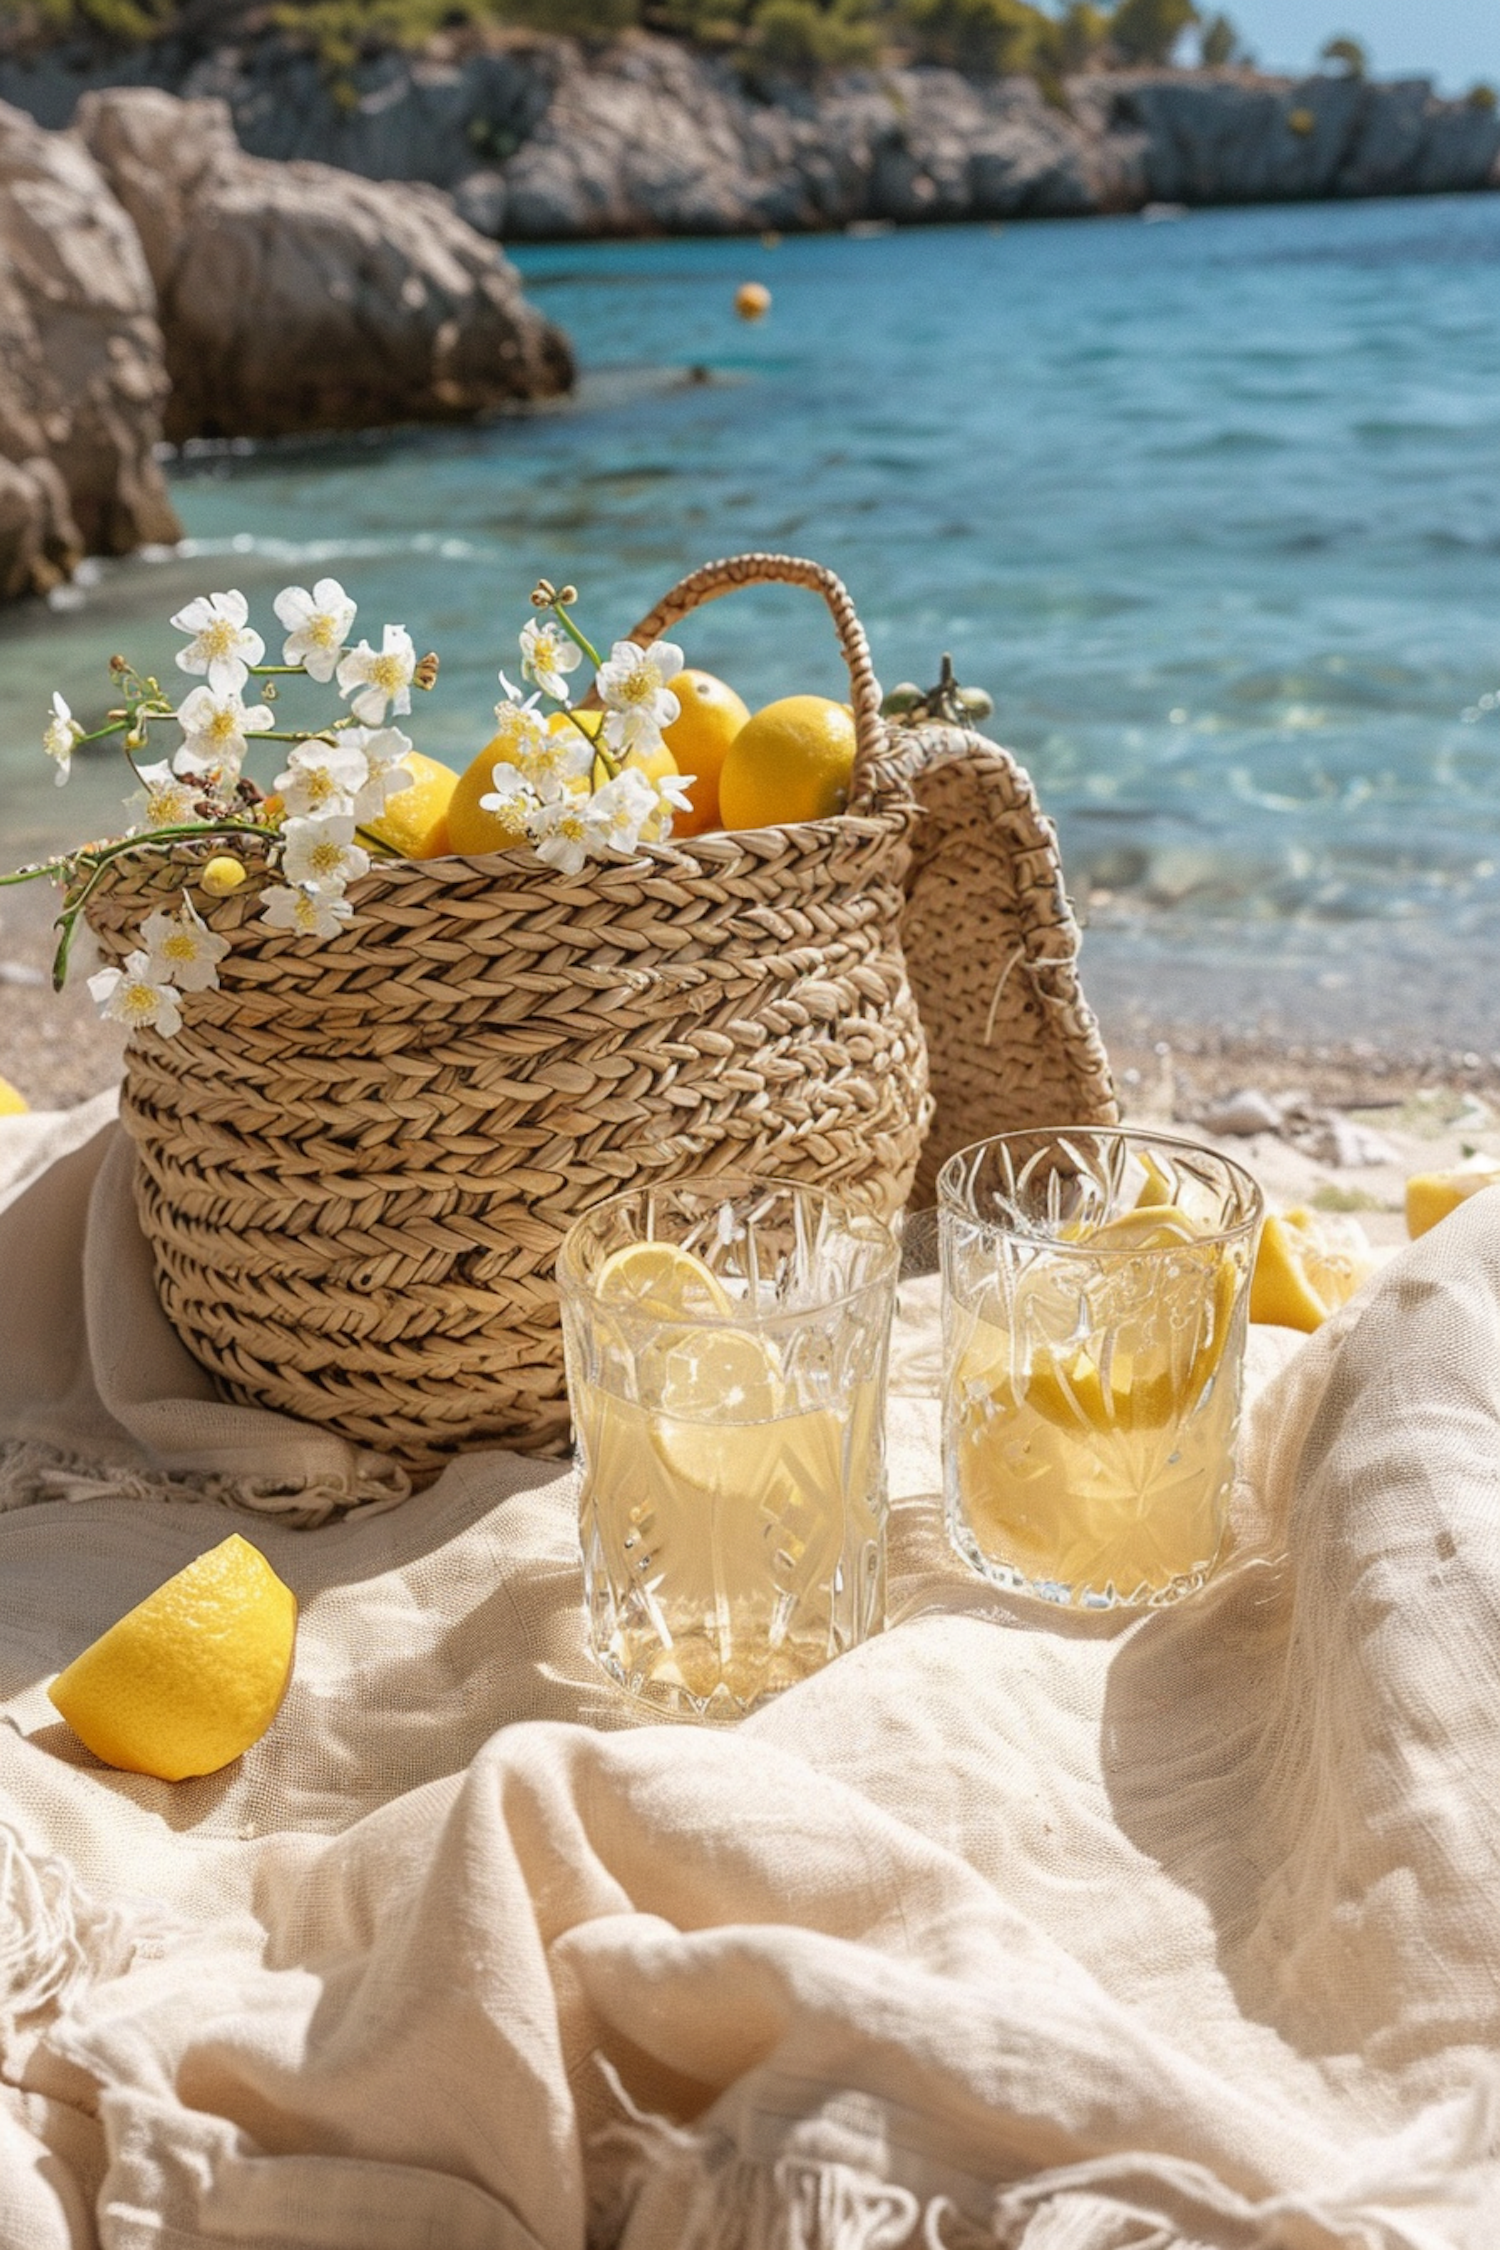 Beachside Picnic with Lemonade